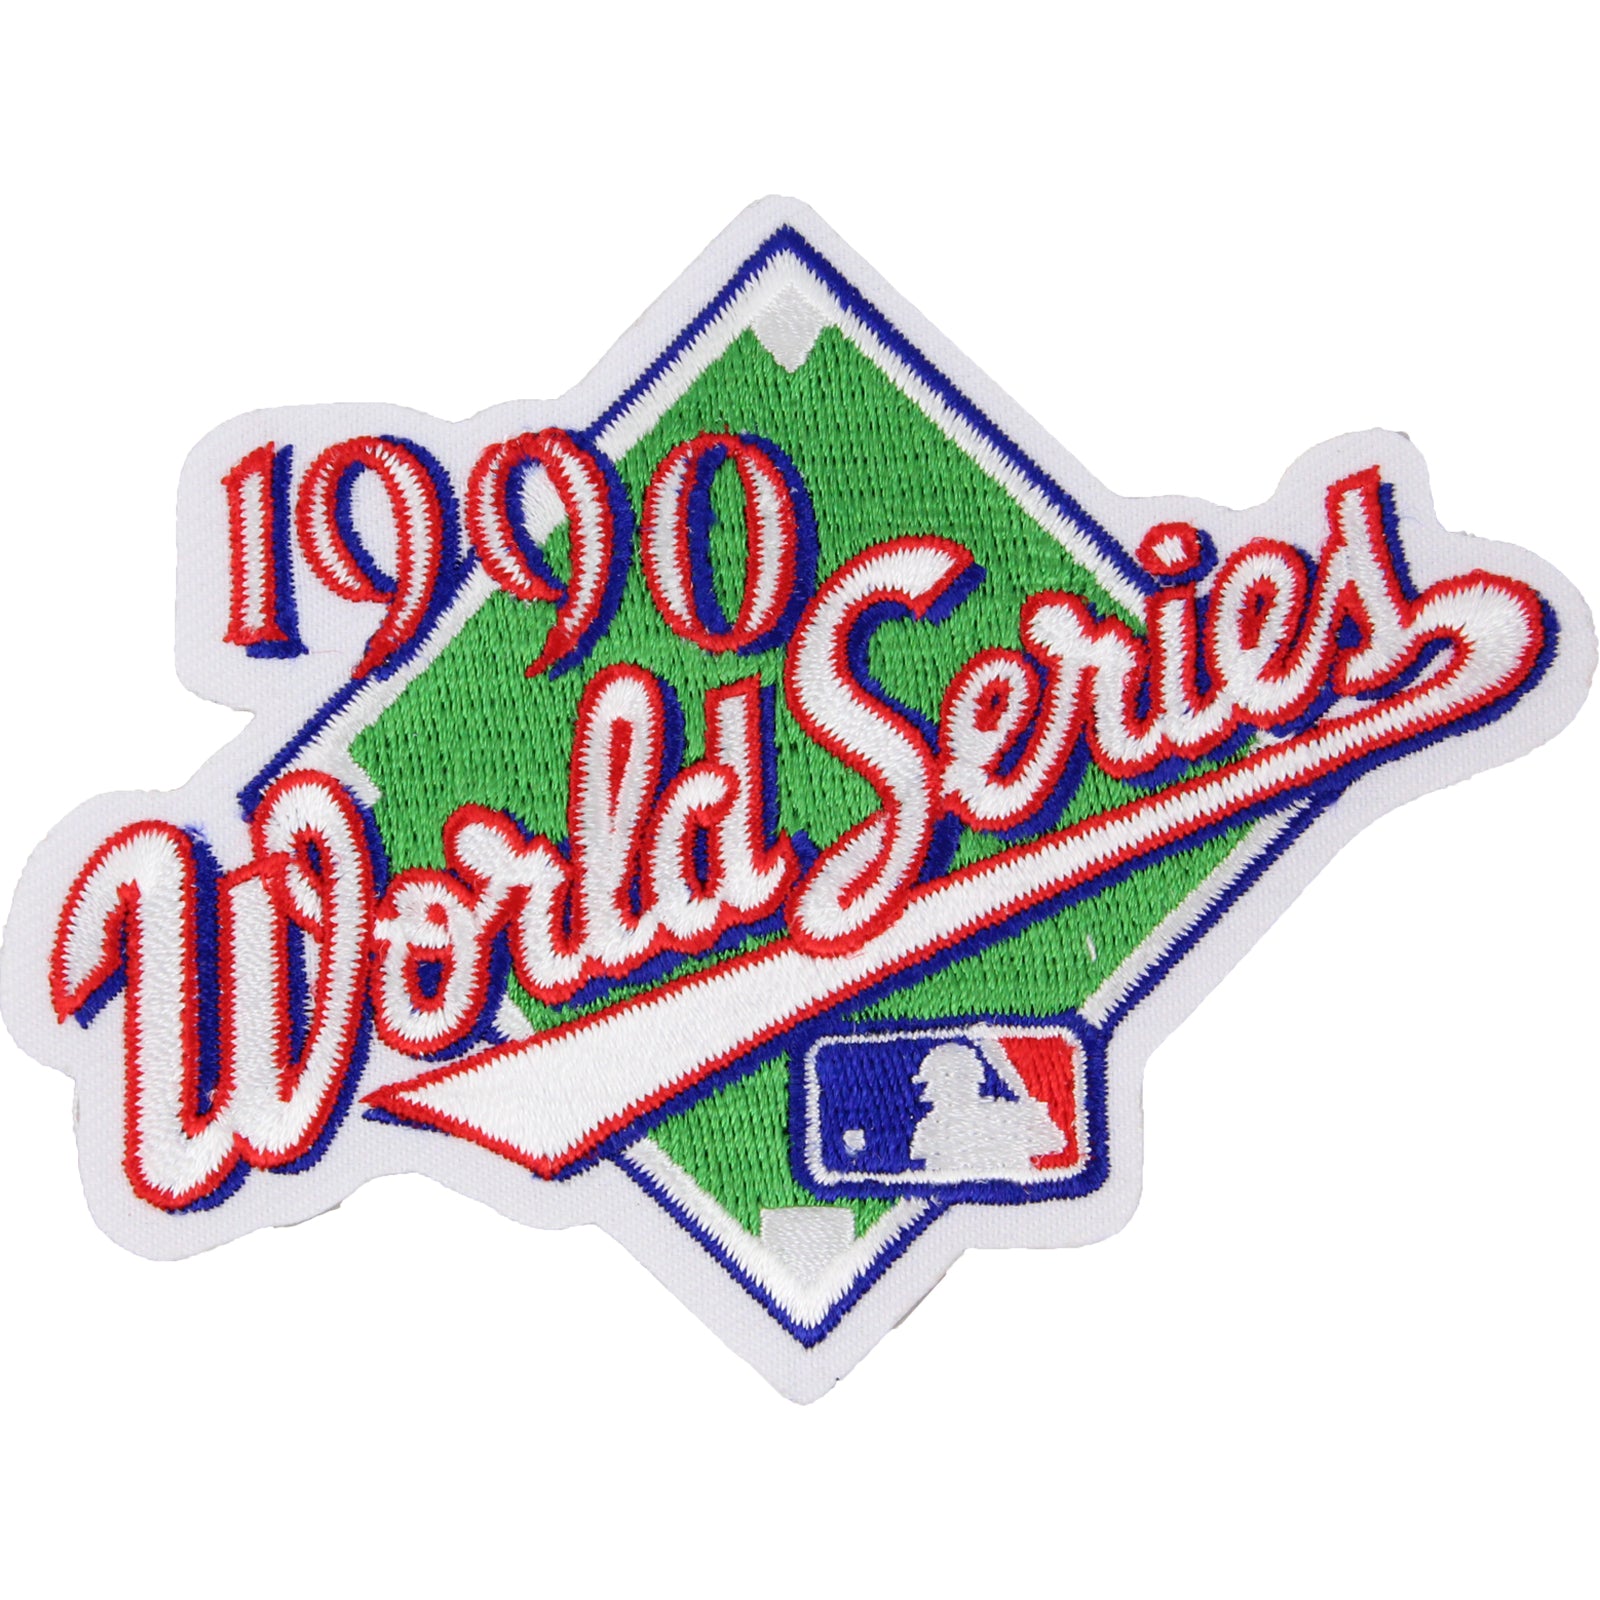 1990 world series